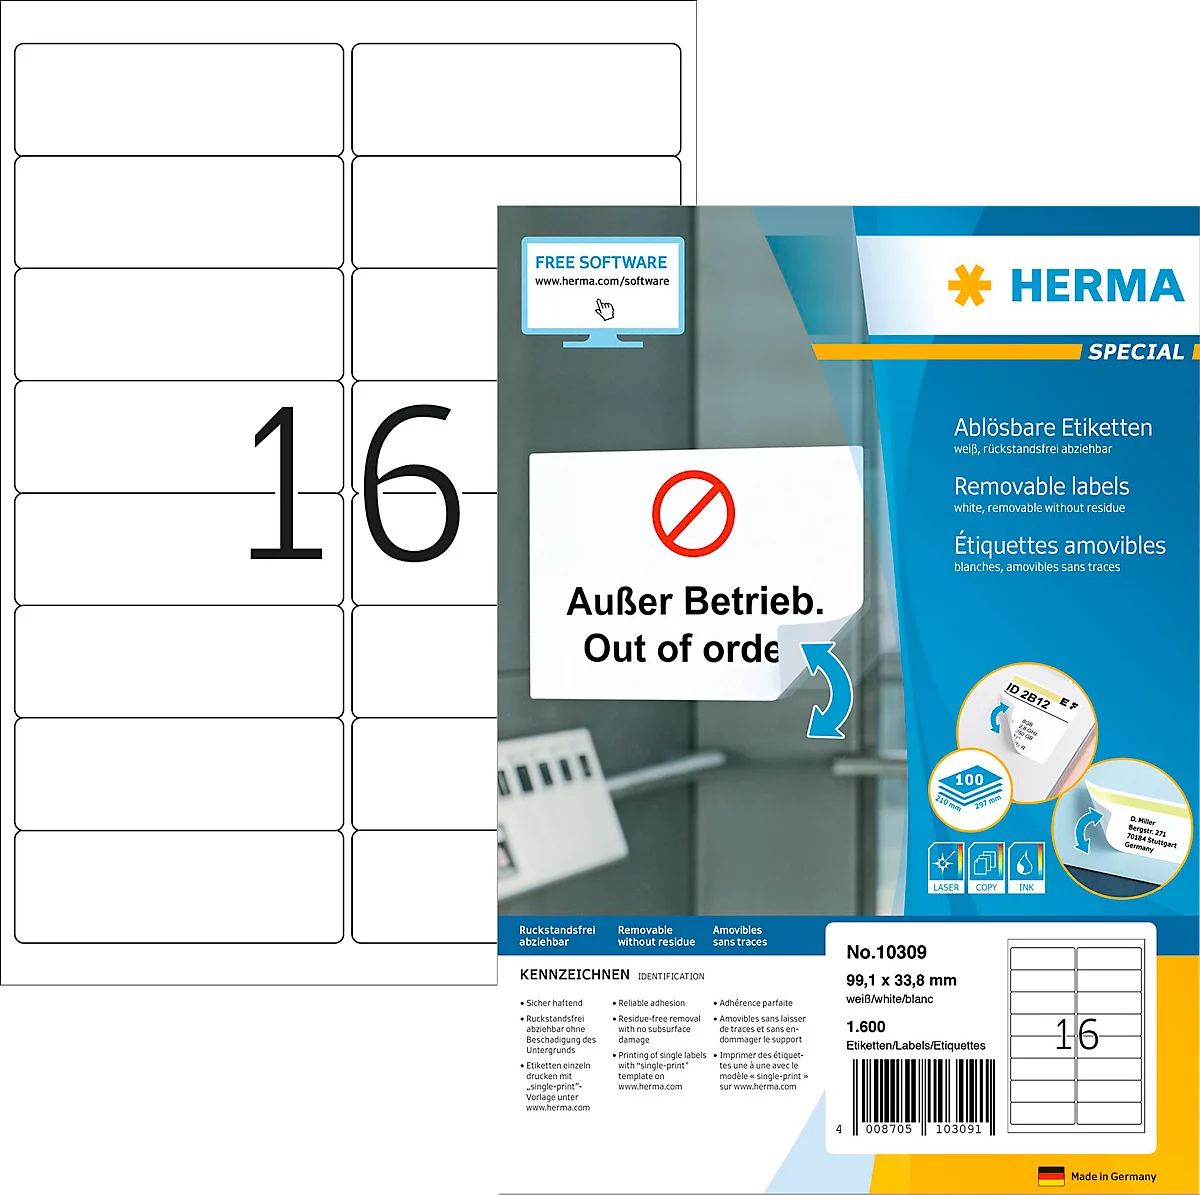 Herma Adressetiketten Special Nr. 10309, 99,1 x 33,8 mm, selbstklebend, ablösbar, bedruckbar, weiß, 1600 Stück auf 100 Blatt